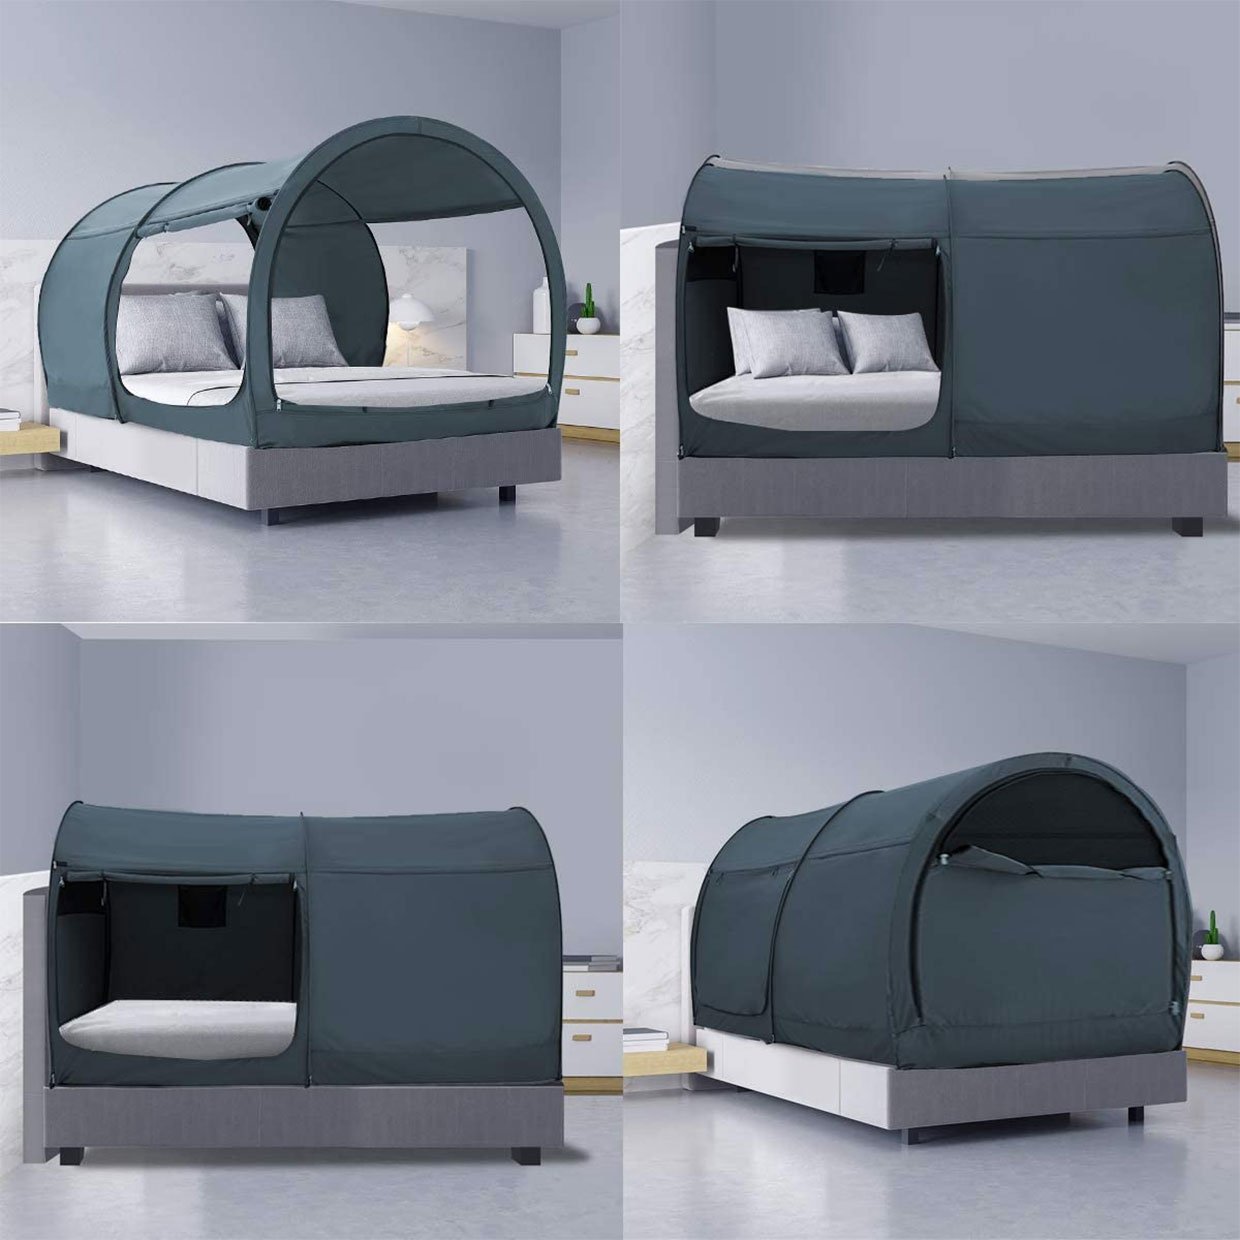 Bed Dream Tent